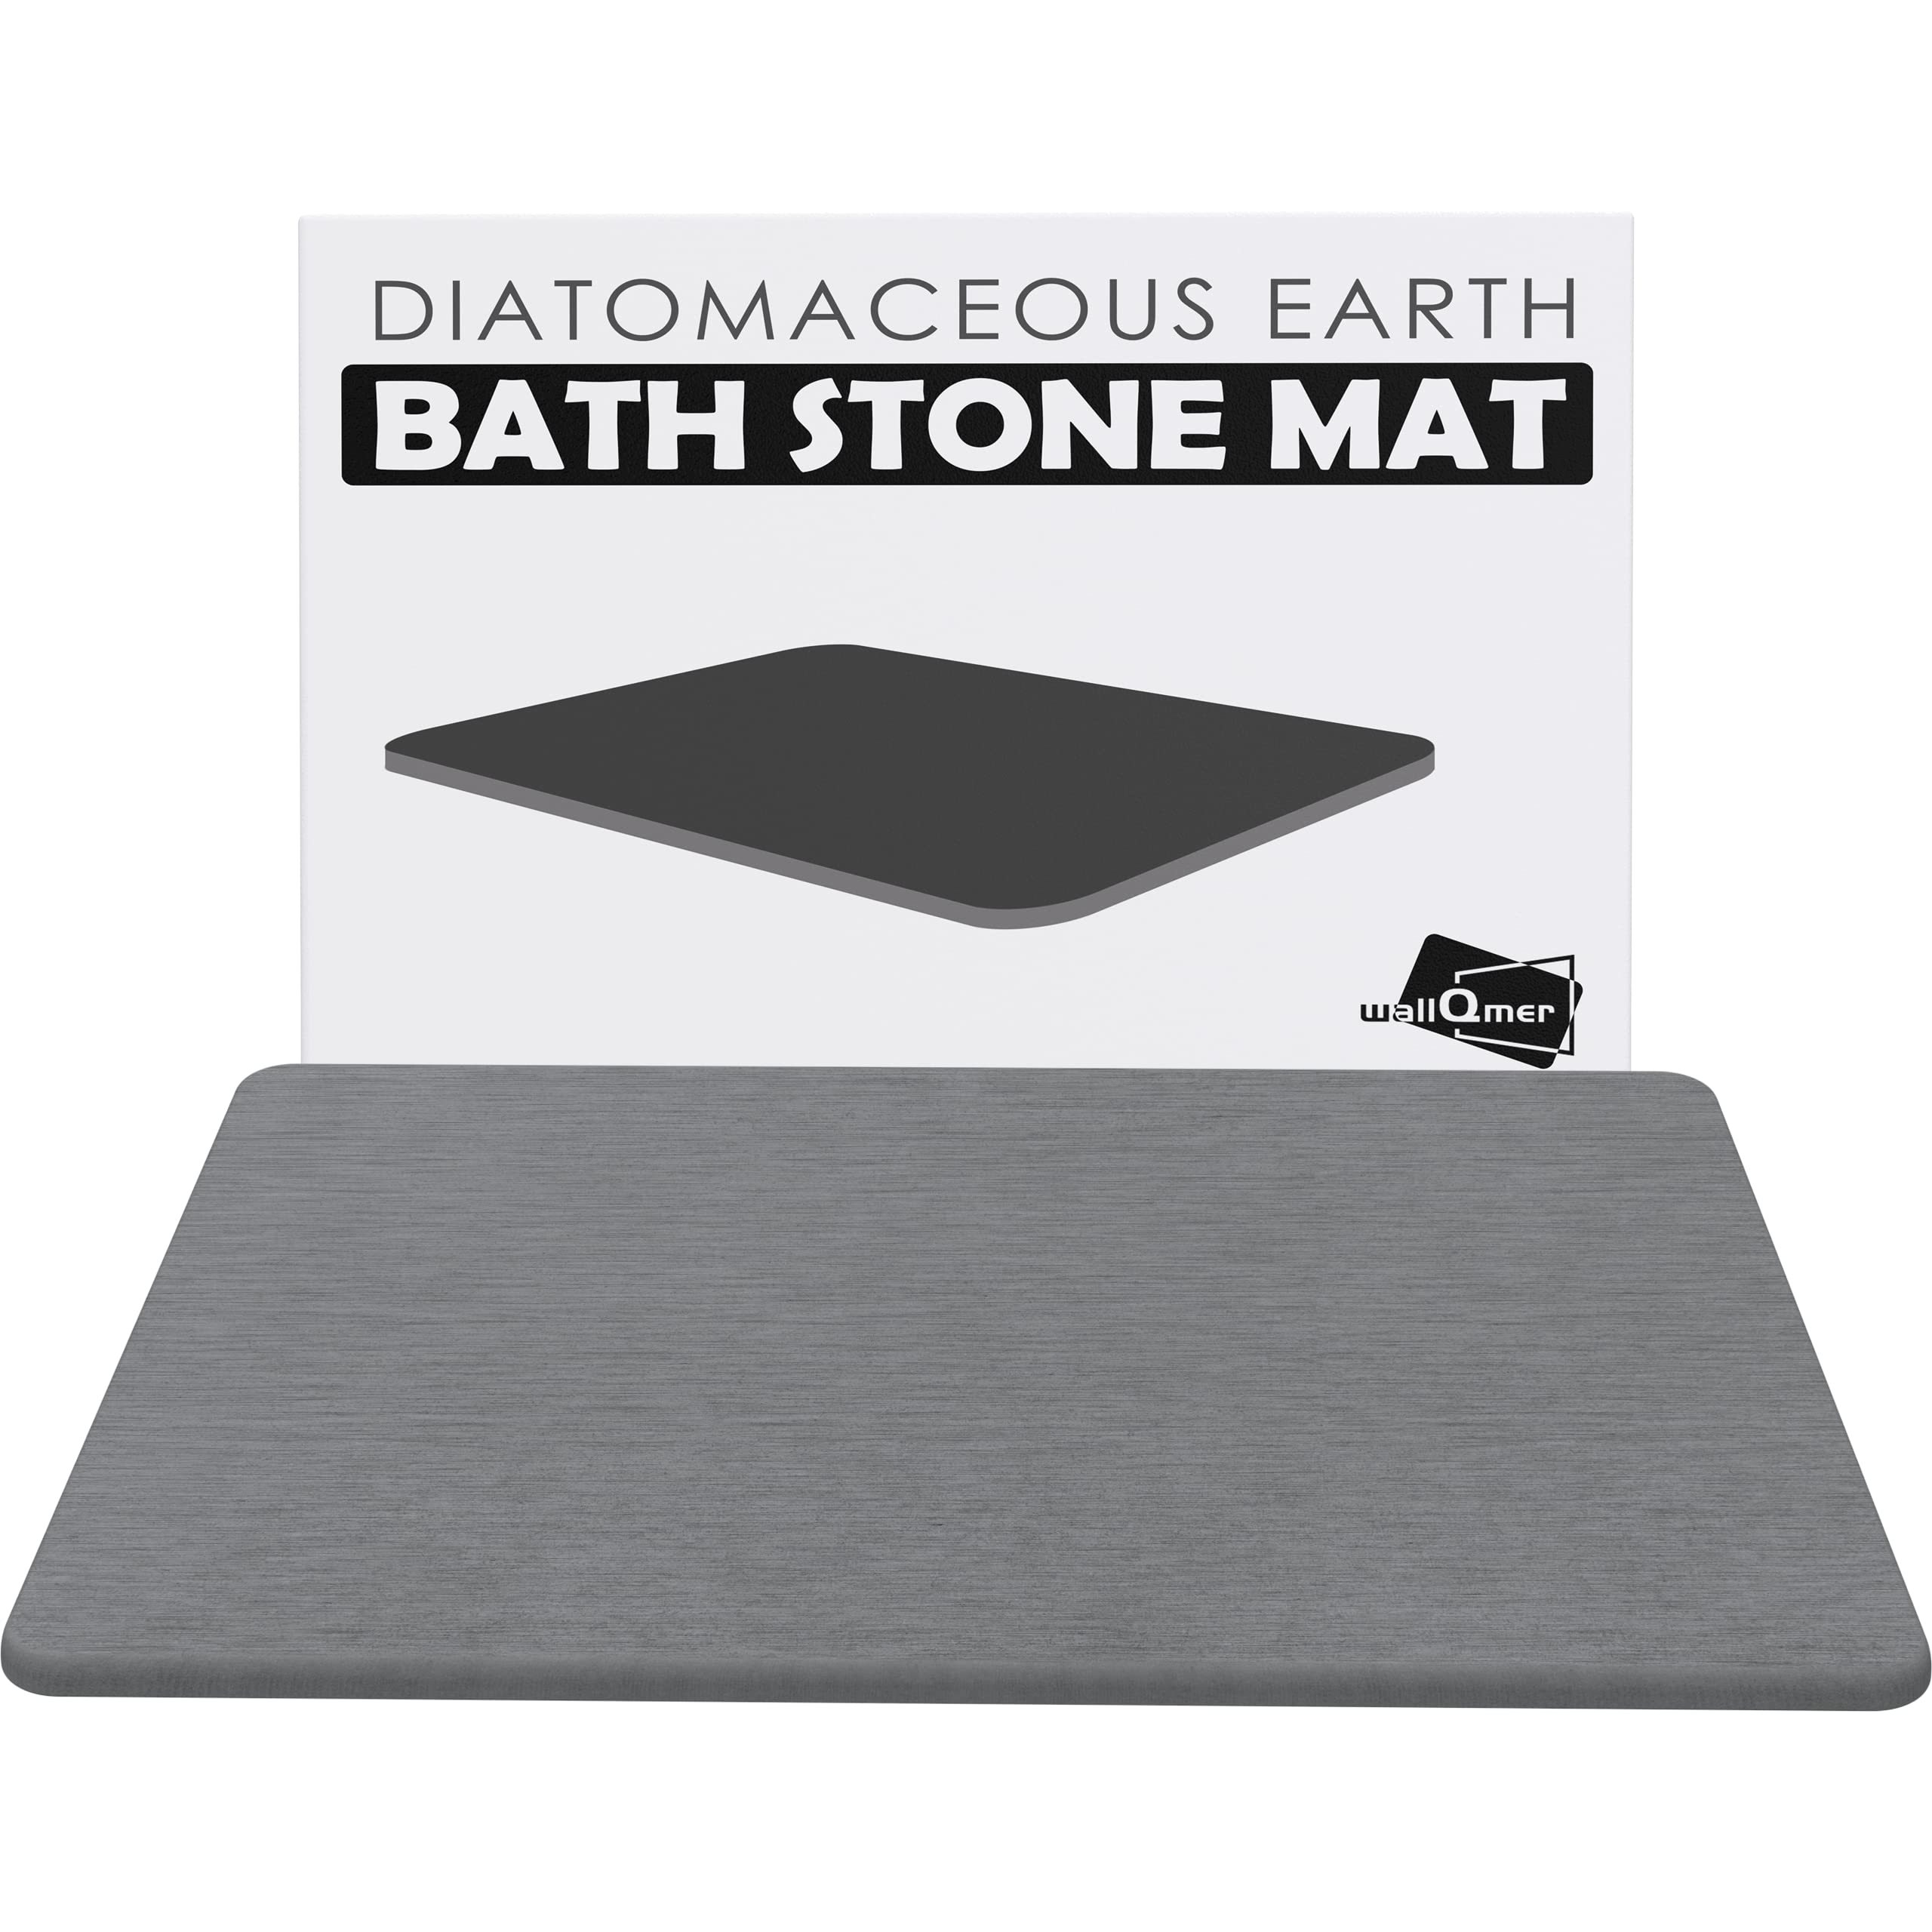 Stone Bath Mat Bathroom Diatomaceous Earth Shower Rugs Non-slip Super  Absorbent